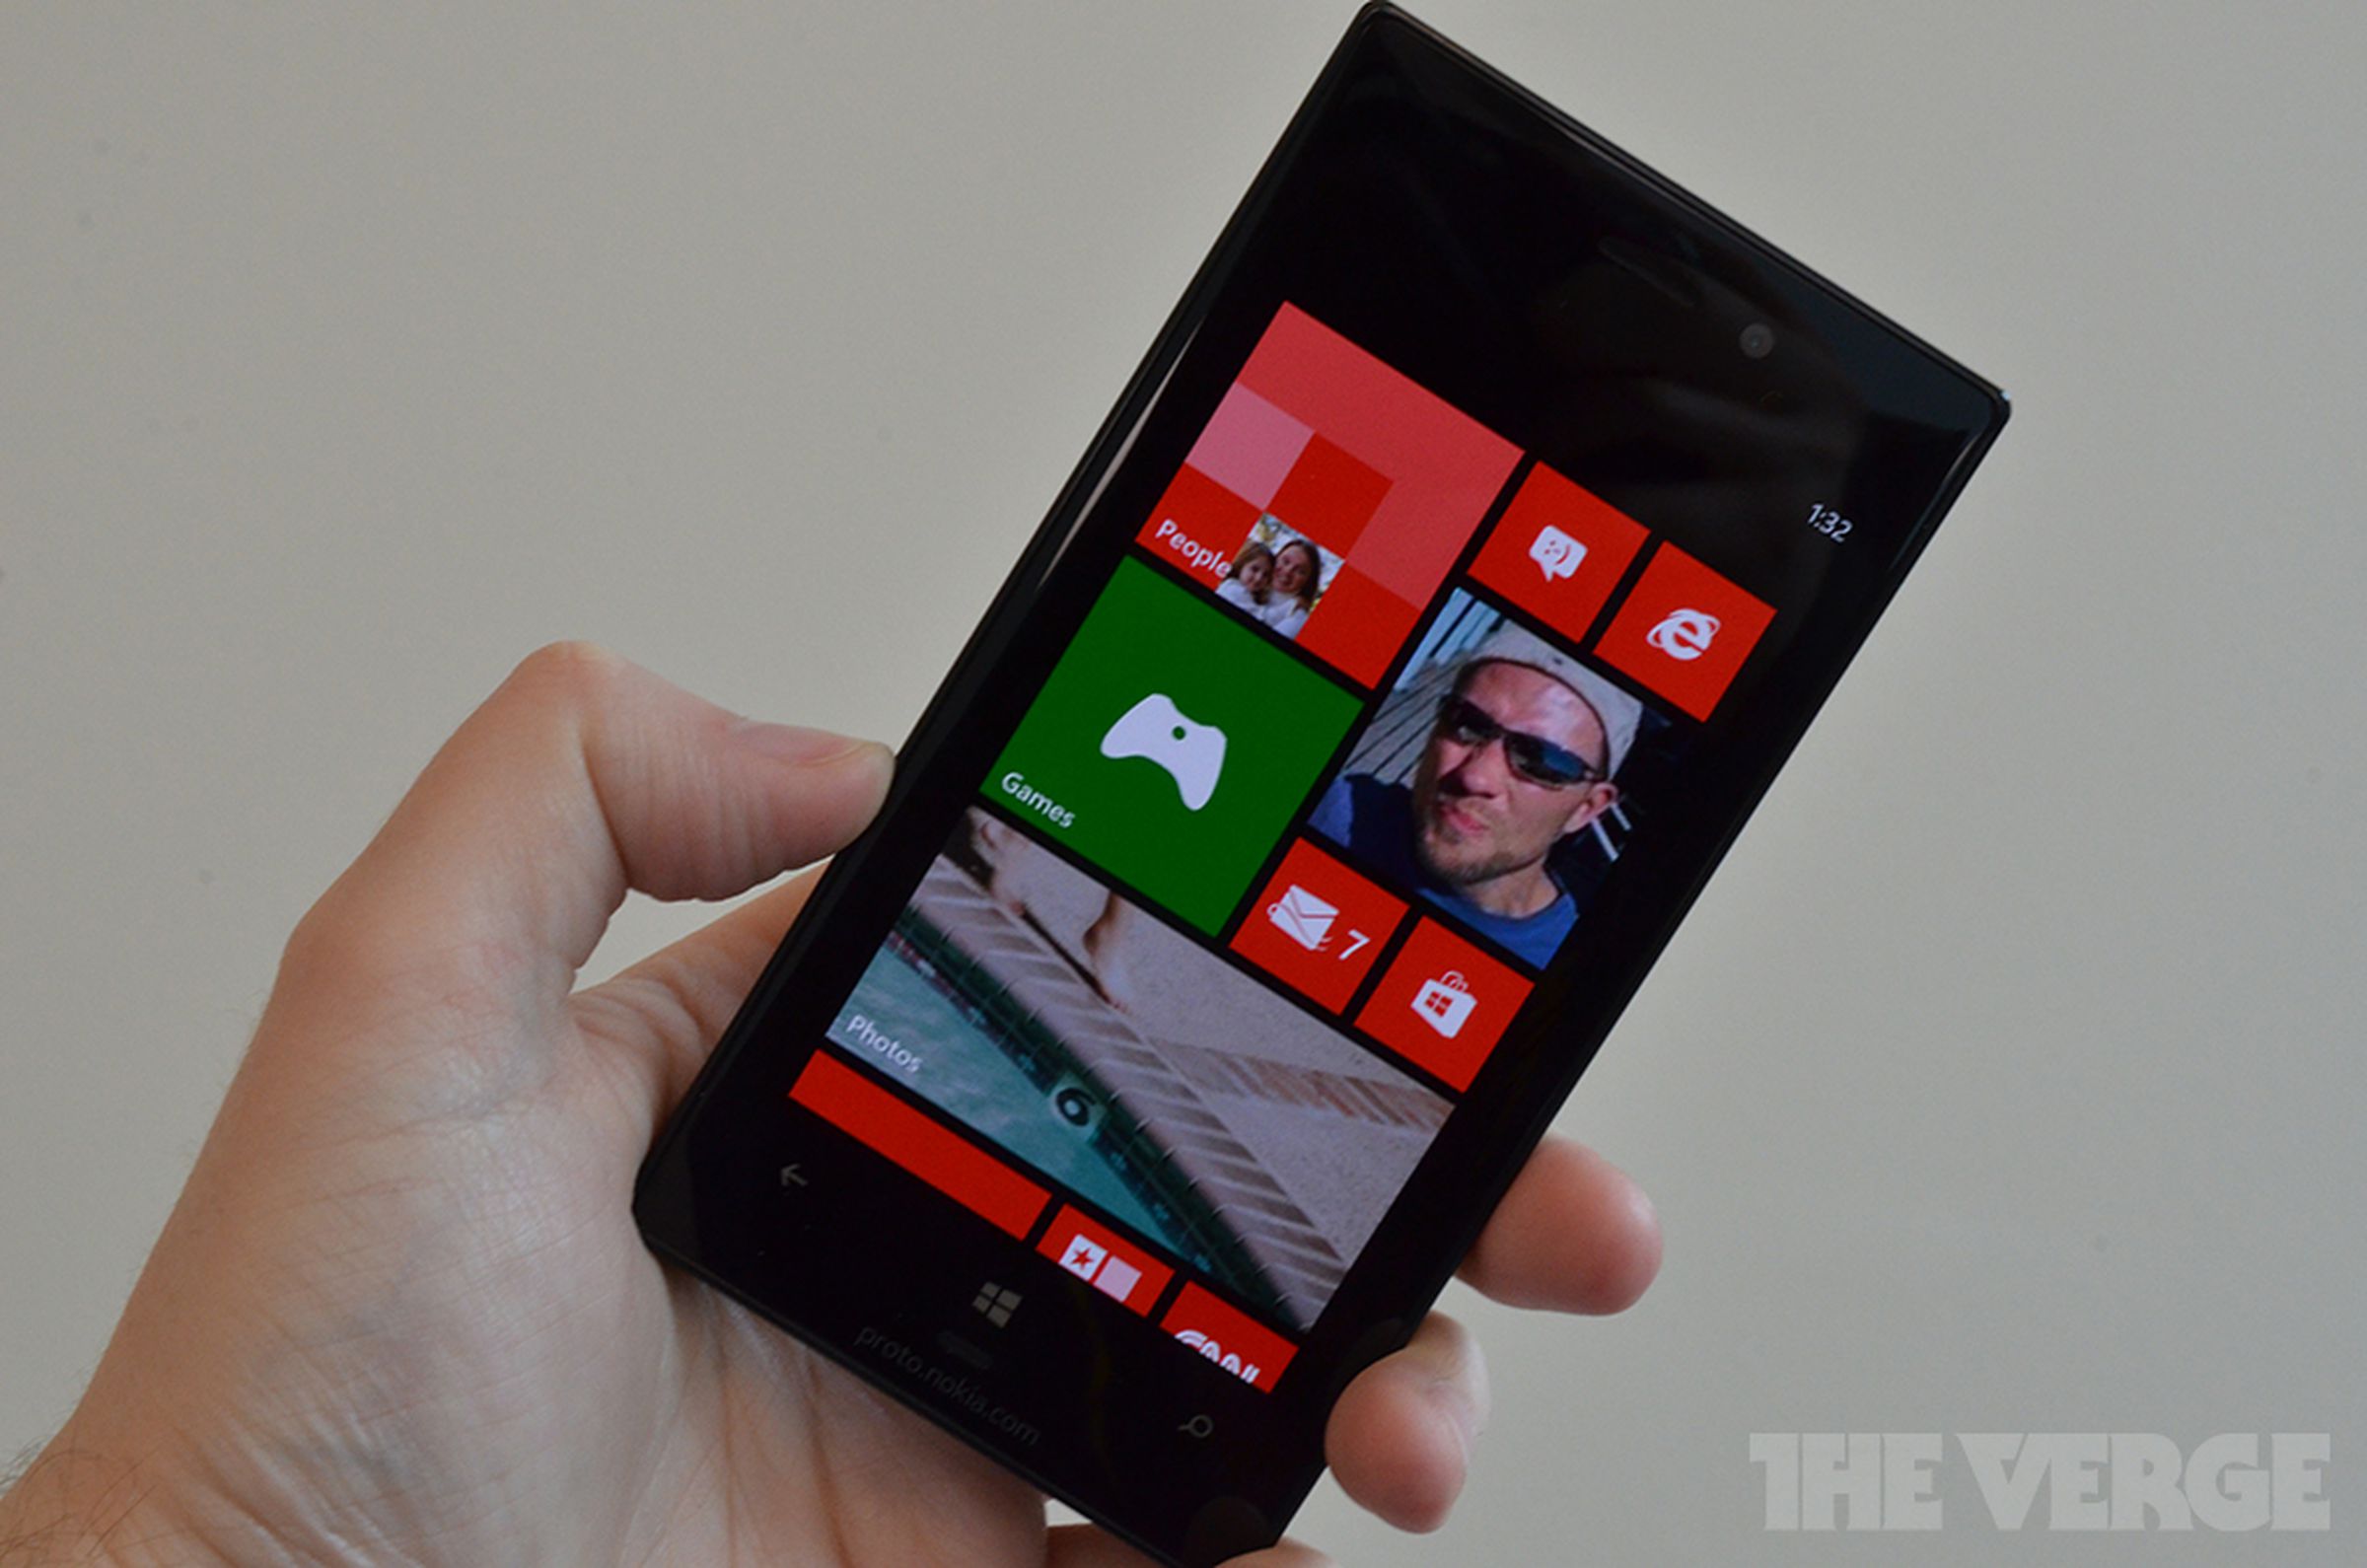 Nokia Lumia 928 hands-on photos